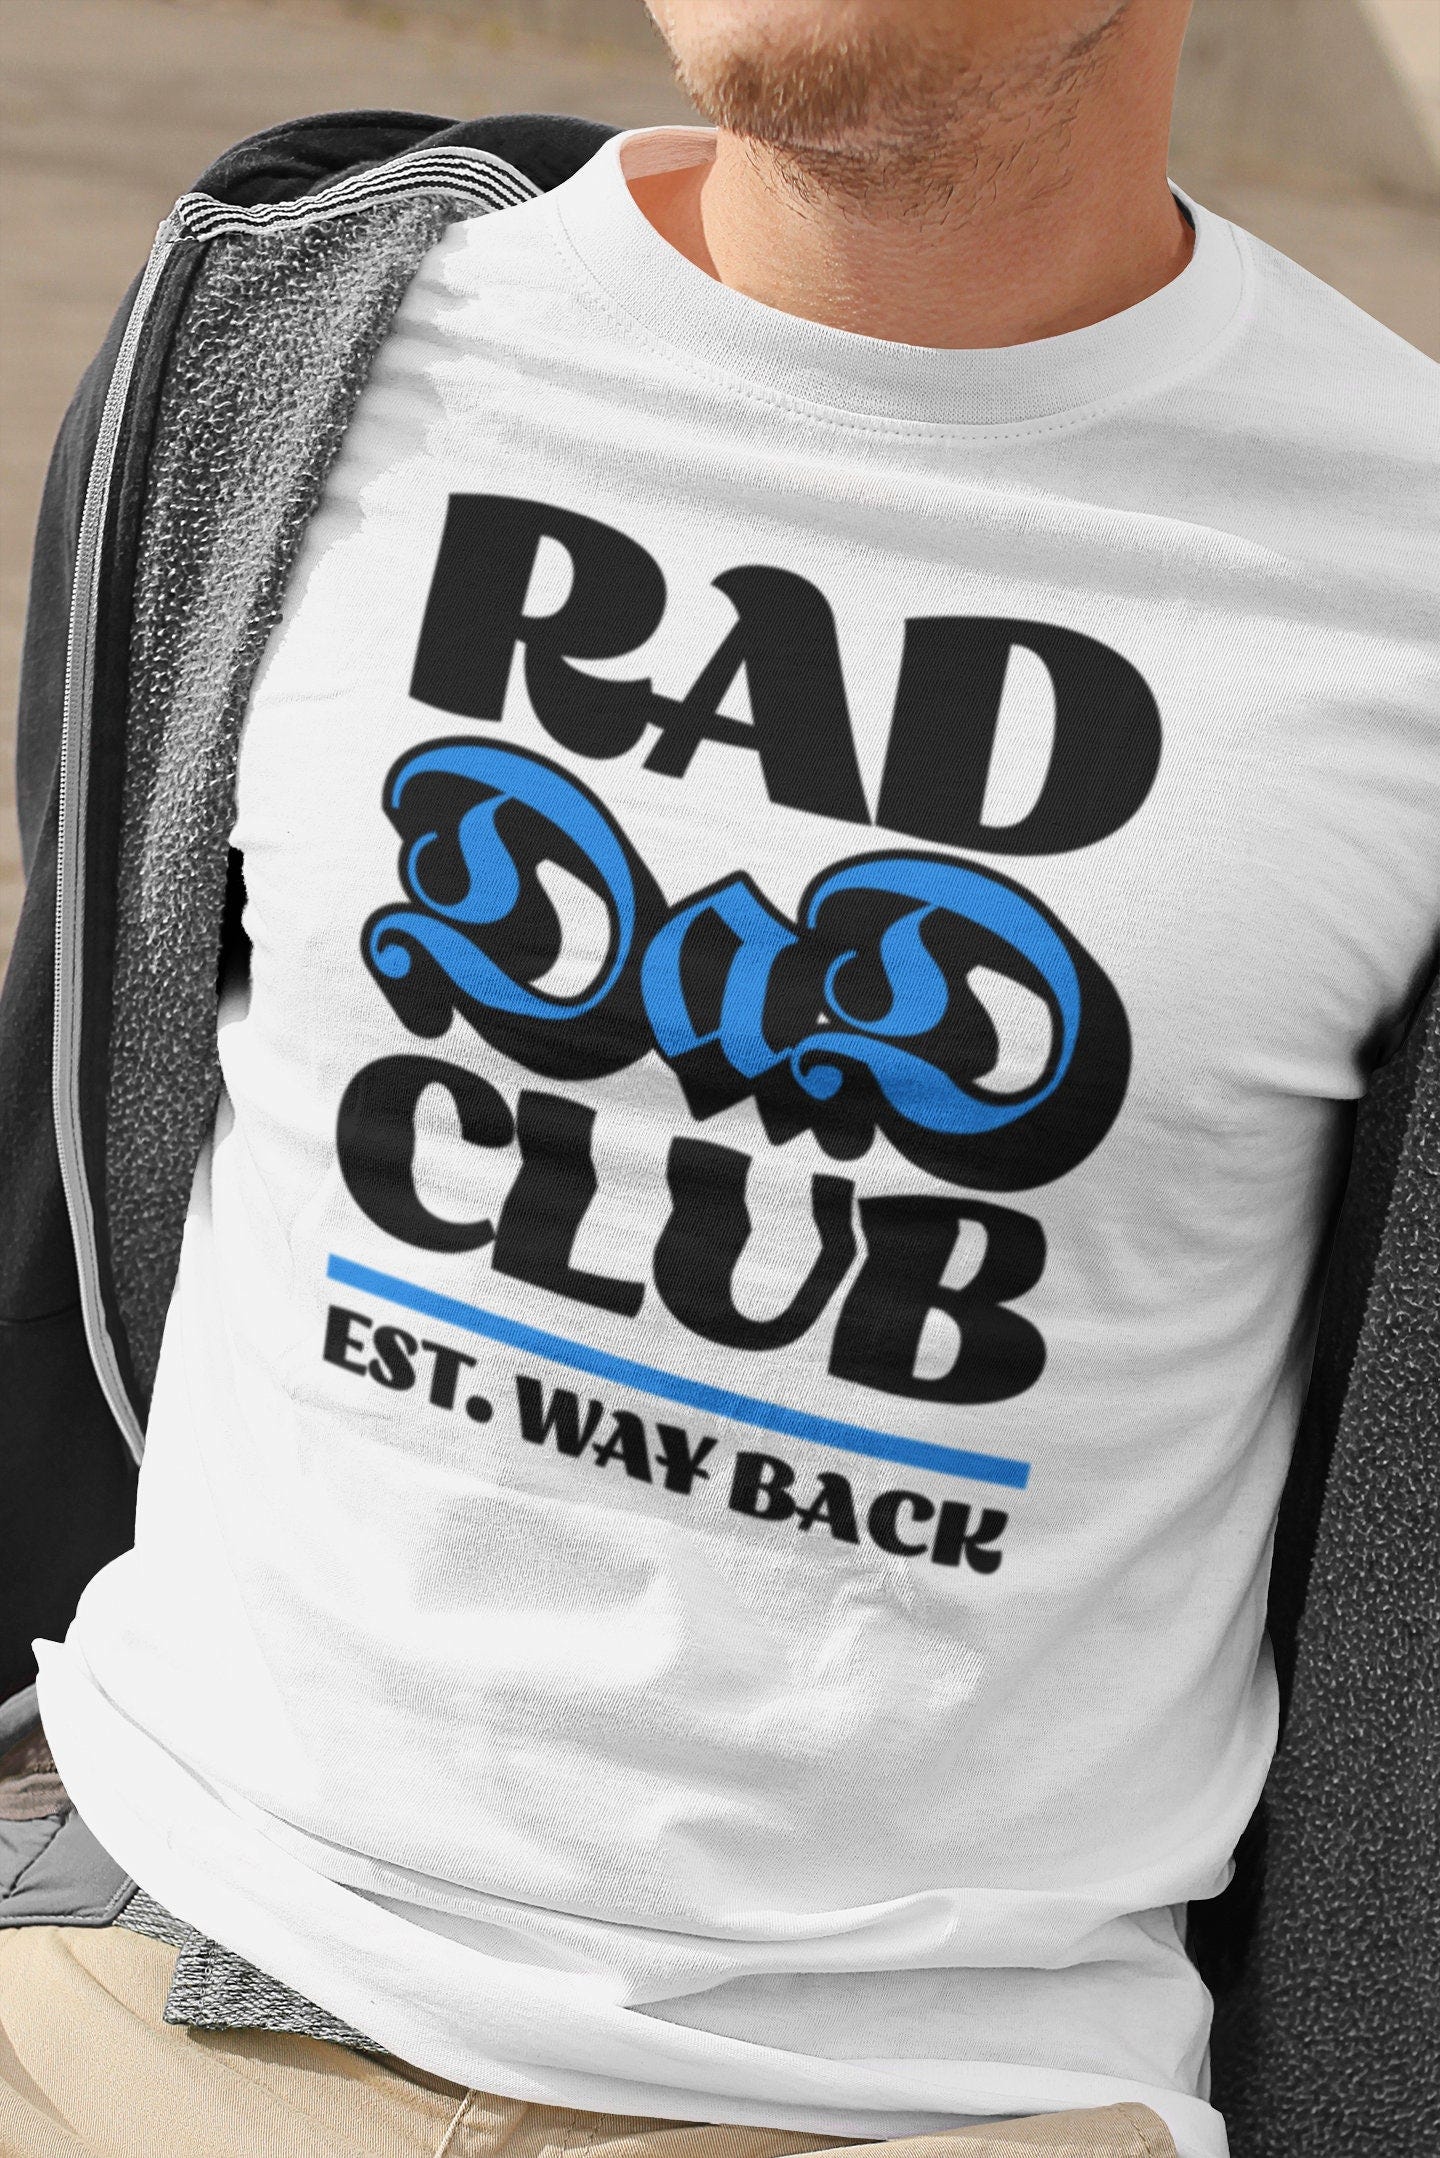 Rad Dad Club Shirt, Dad Birthday Gift, Cool Dad Shirt, Funny Dad Shirt, Rad Dad Club, Gift For Dad, Gift for Husband, Rad Dad Shirt